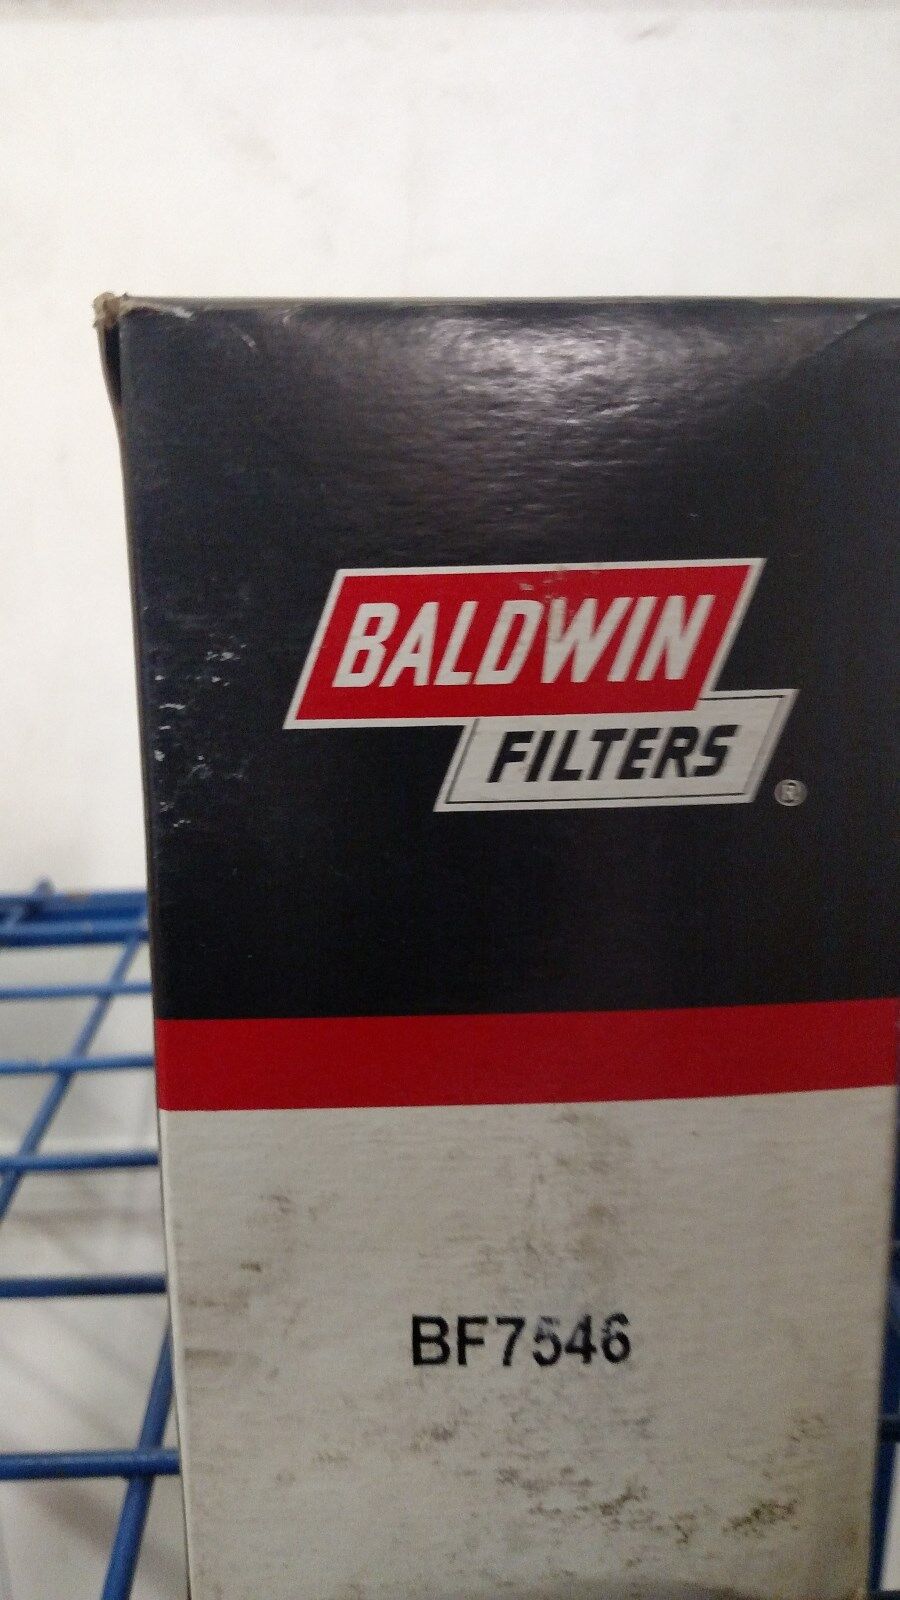 BALDWIN FILTERS BF7546 Fuel Filter, 6-31/32x3-11/16x6-31/32 In